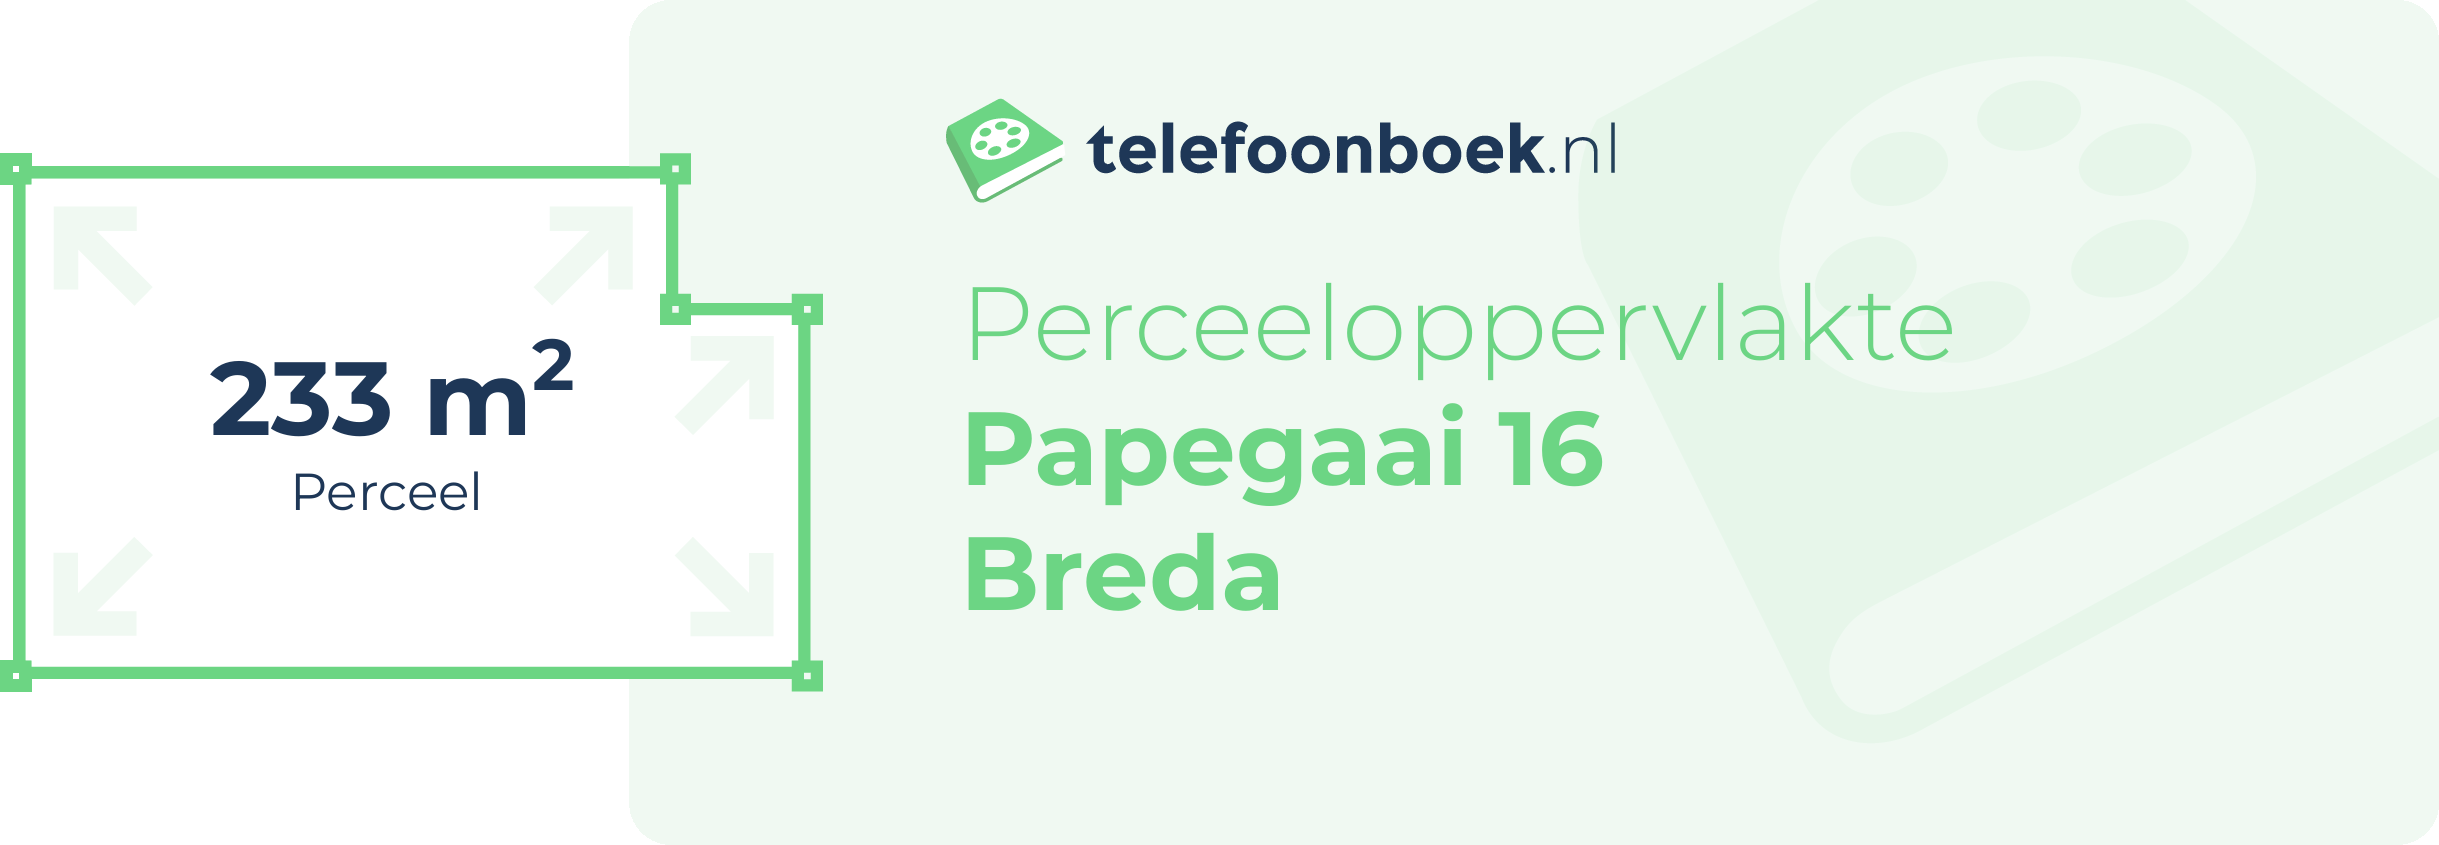 Perceeloppervlakte Papegaai 16 Breda